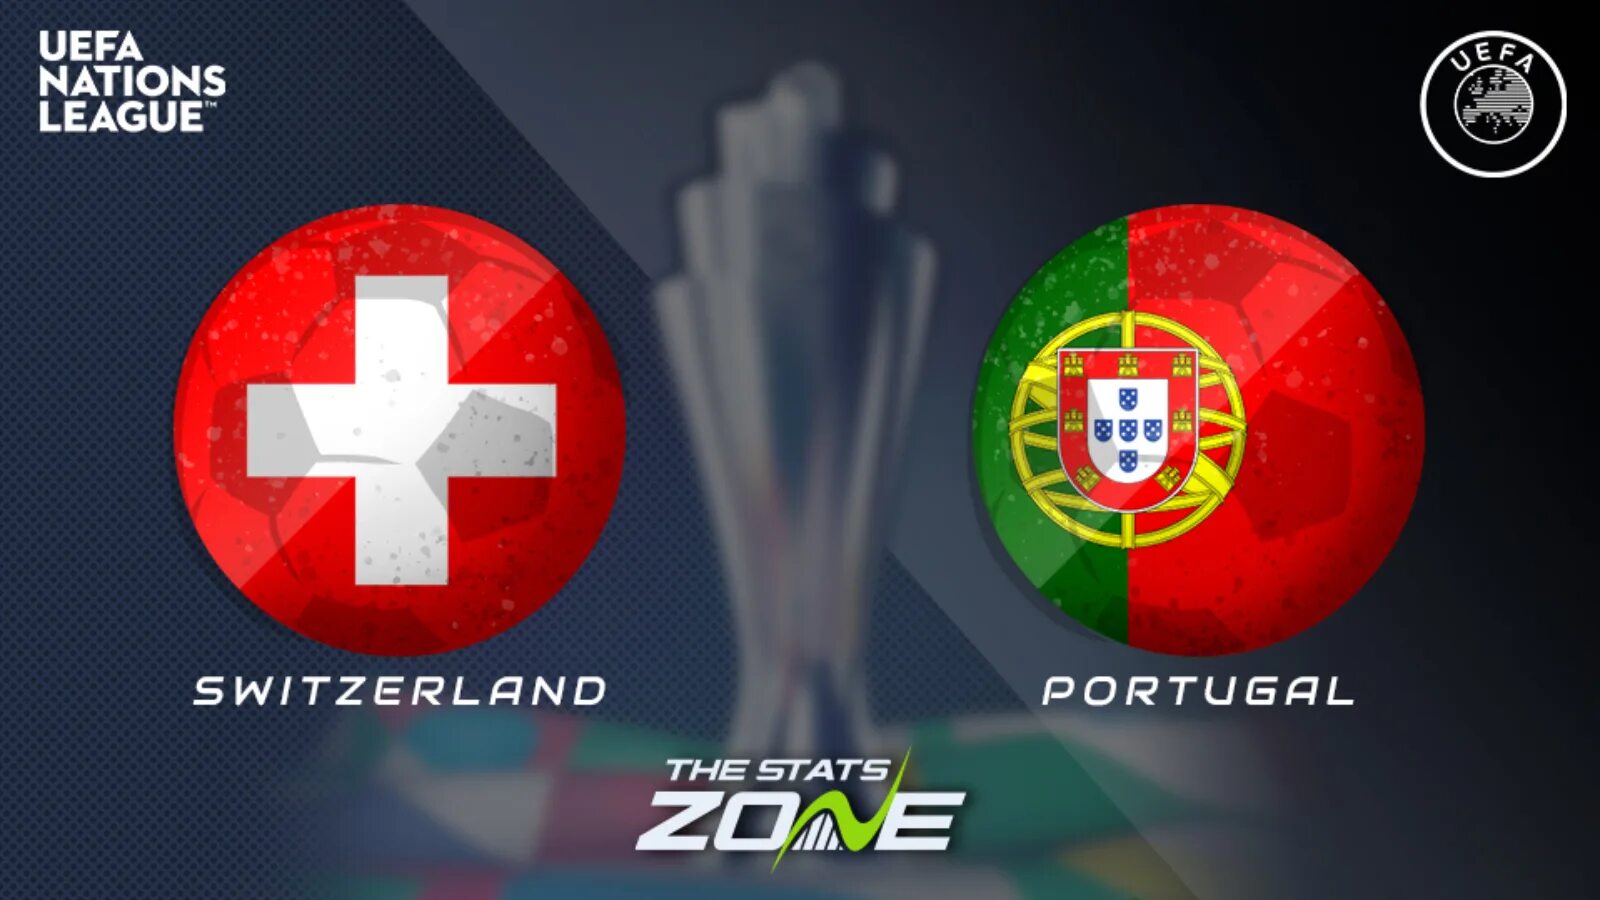 Португалия Швейцария. Футбол Португалия Швейцария. Португалия Швейцария превью. Португалия Швейцария 2022.